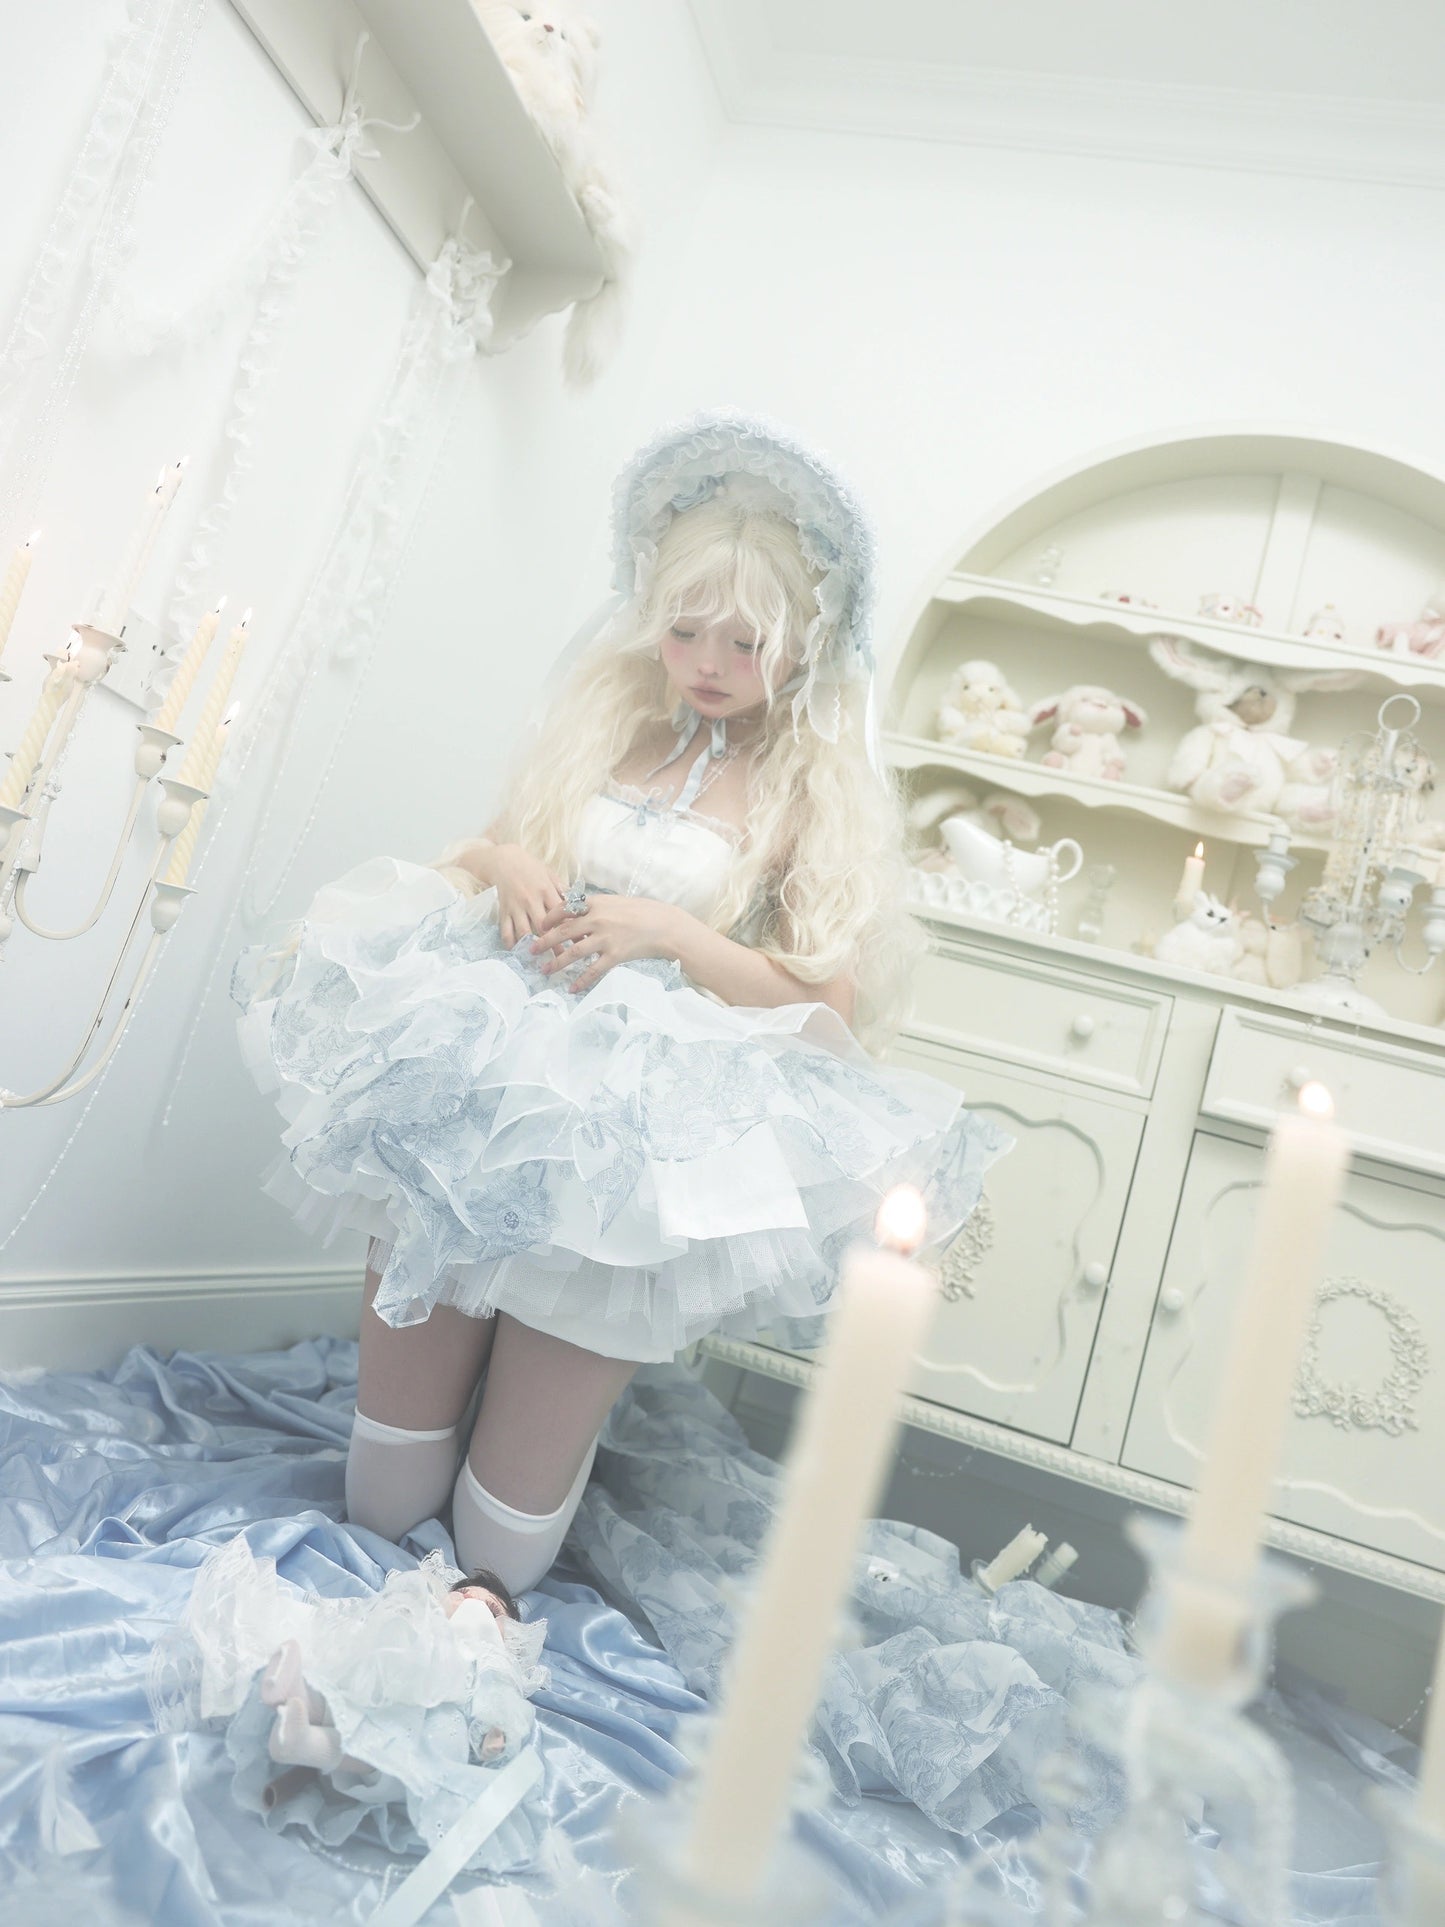 ♡ Porcelain Doll ♡ - Princess Dress